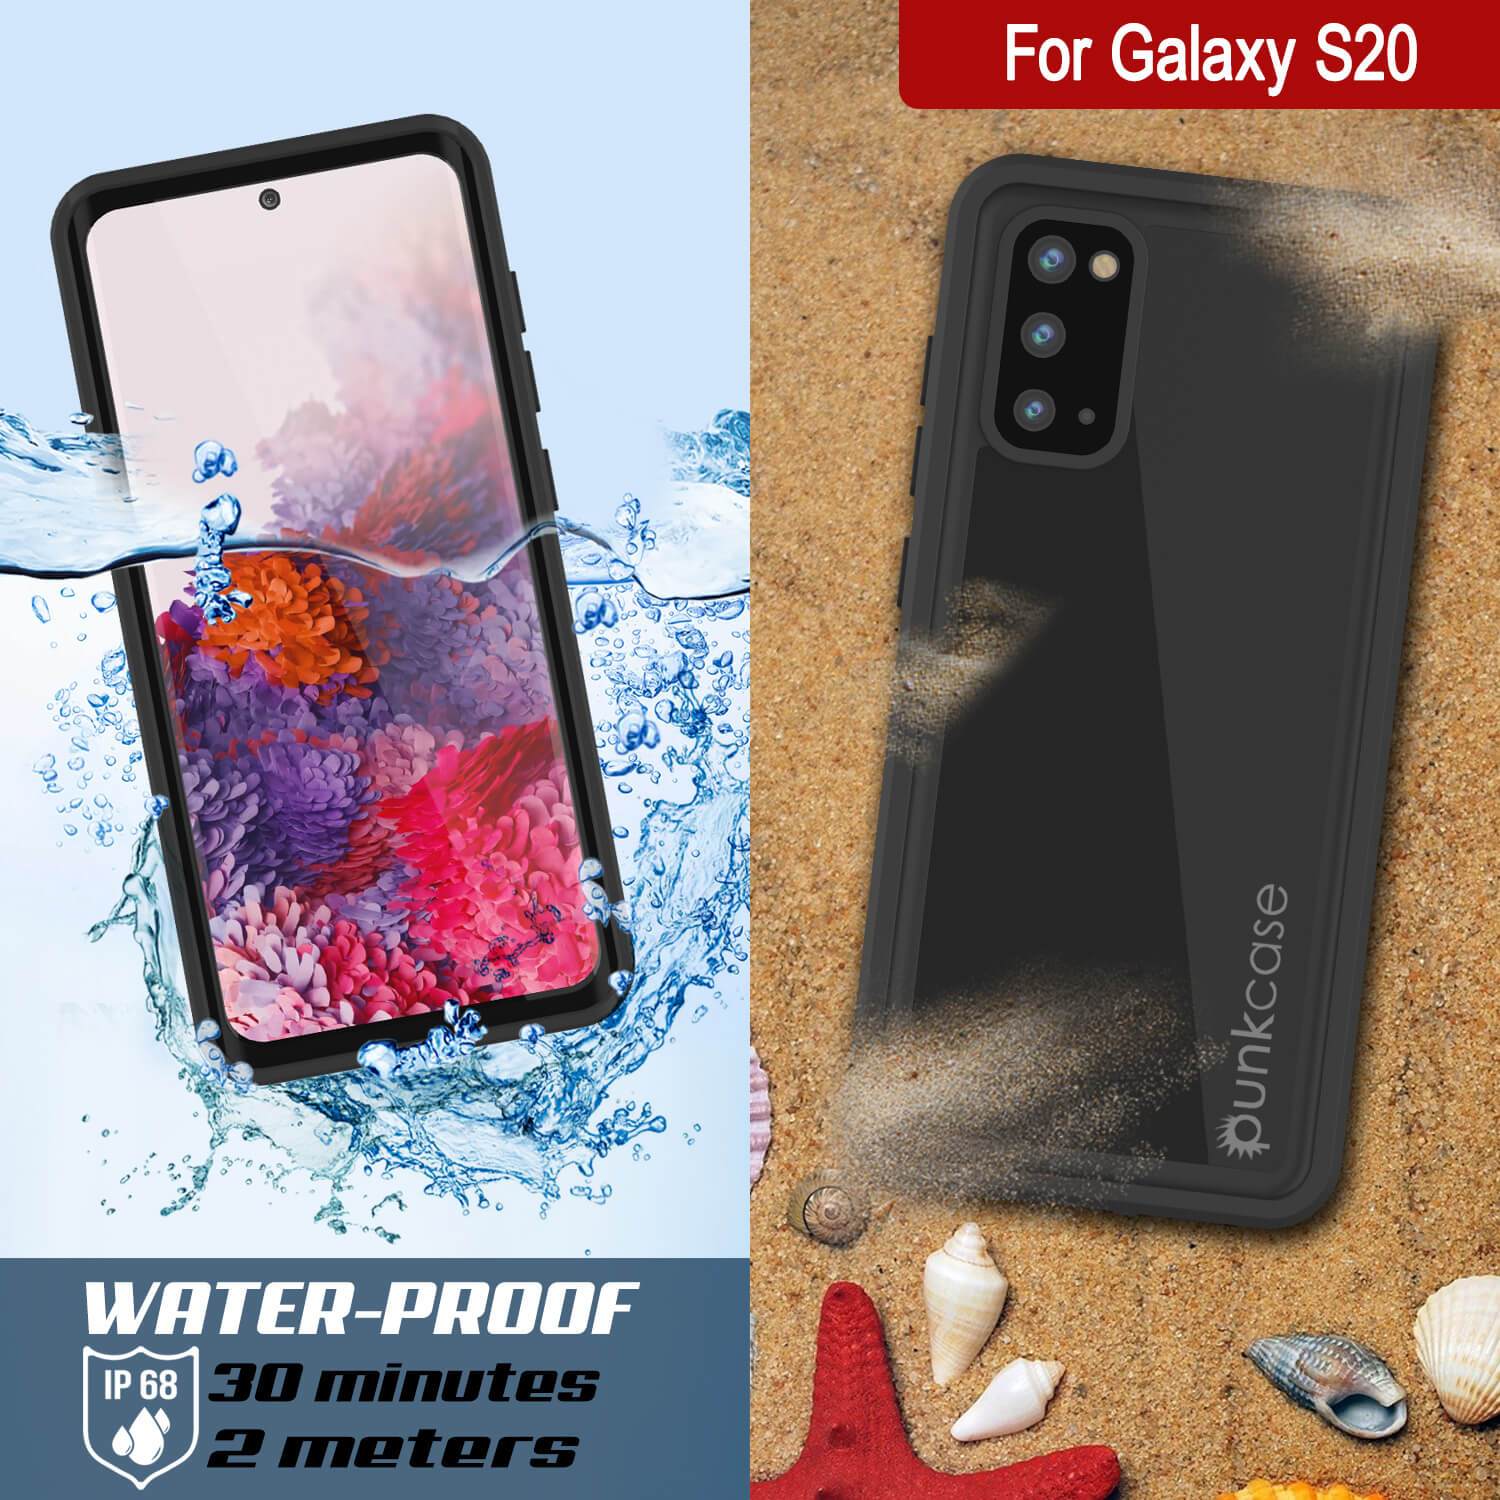 Galaxy S20 Waterproof Case, Punkcase StudStar White Thin 6.6ft Underwater IP68 Shock/Snow Proof